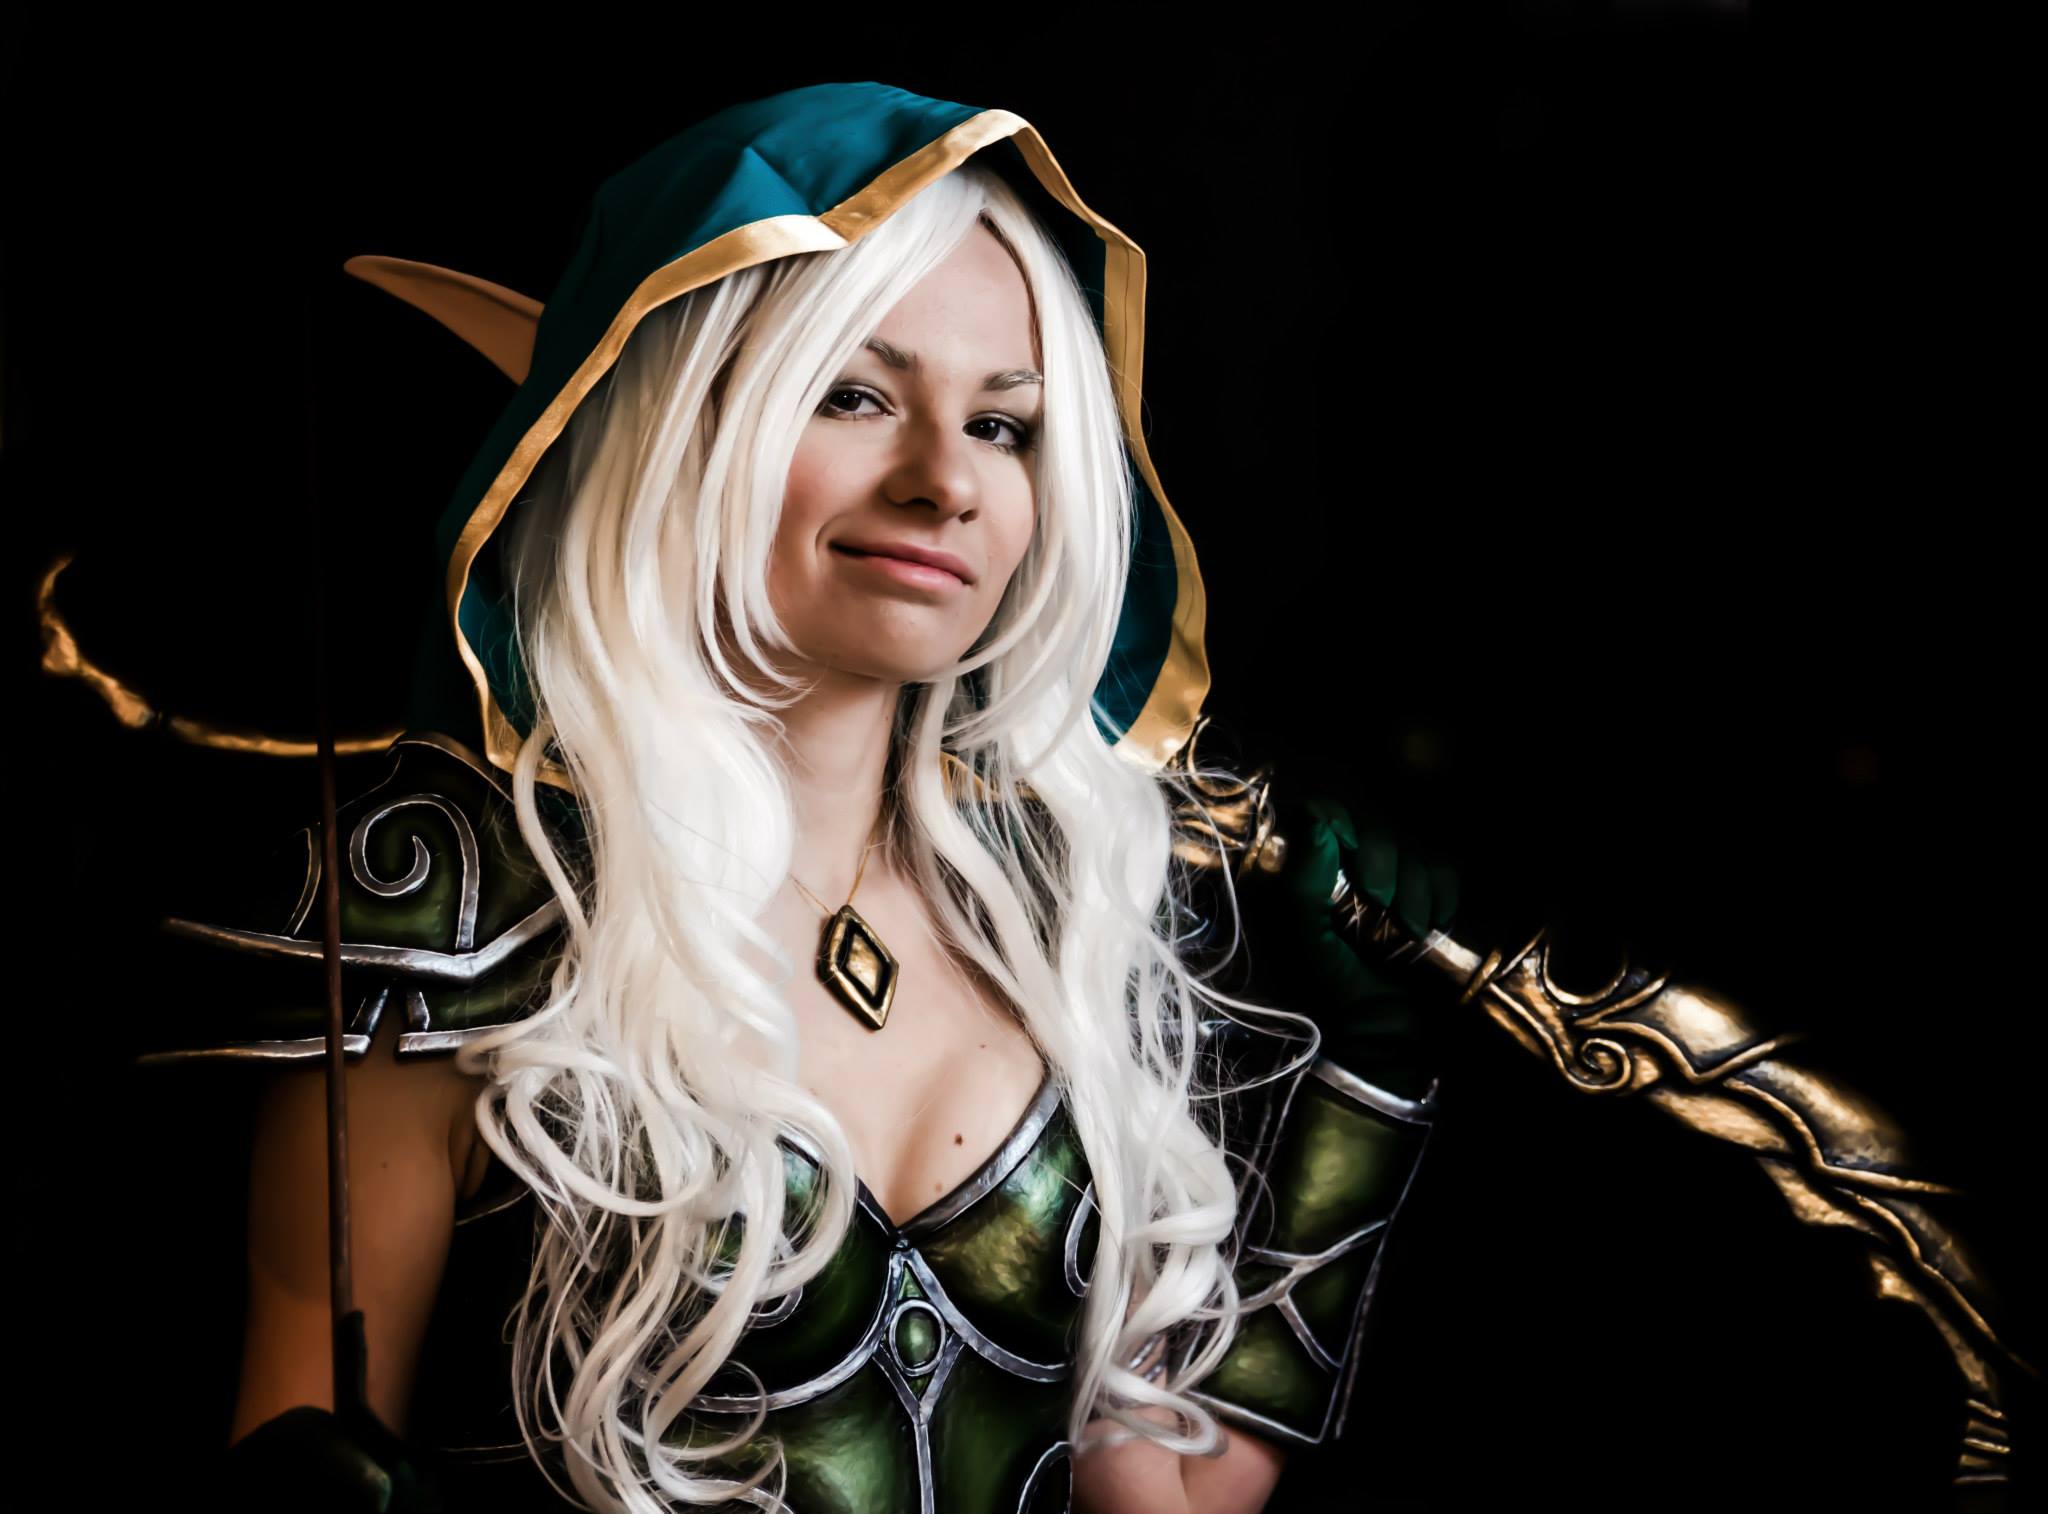 World of Warcraft: Vereesa Windrunner Cosplay by Ardsami